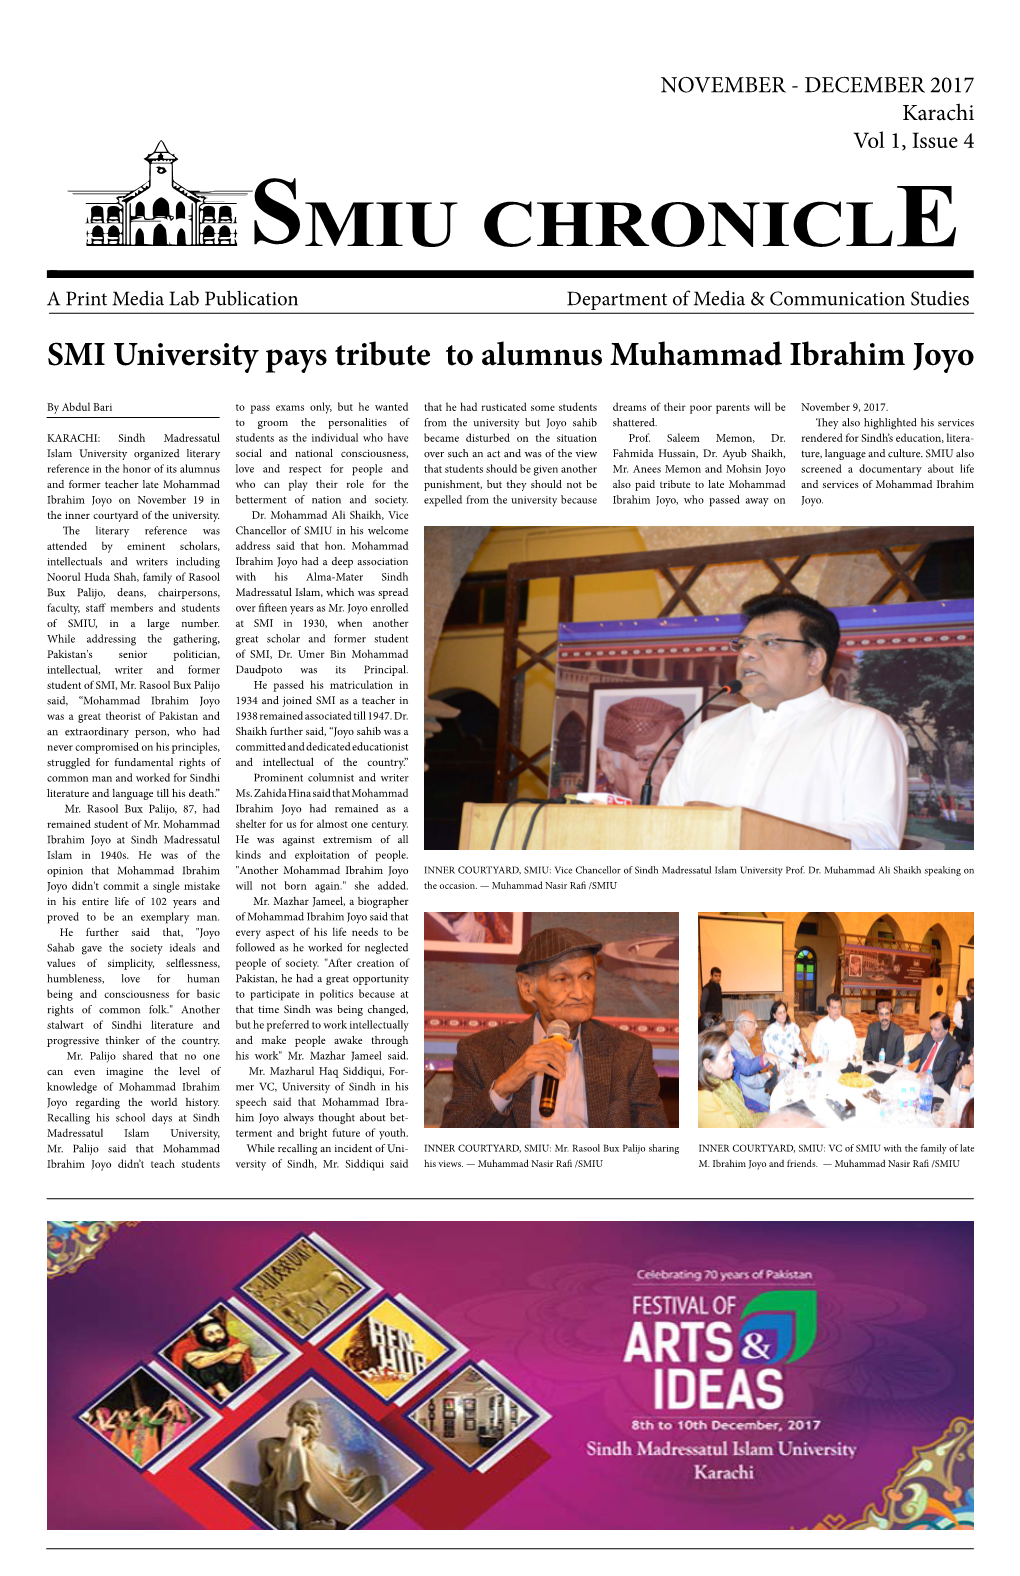 SMIU CHRONICLE a Print Media Lab Publication Department of Media & Communication Studies SMI University Pays Tribute to Alumnus Muhammad Ibrahim Joyo